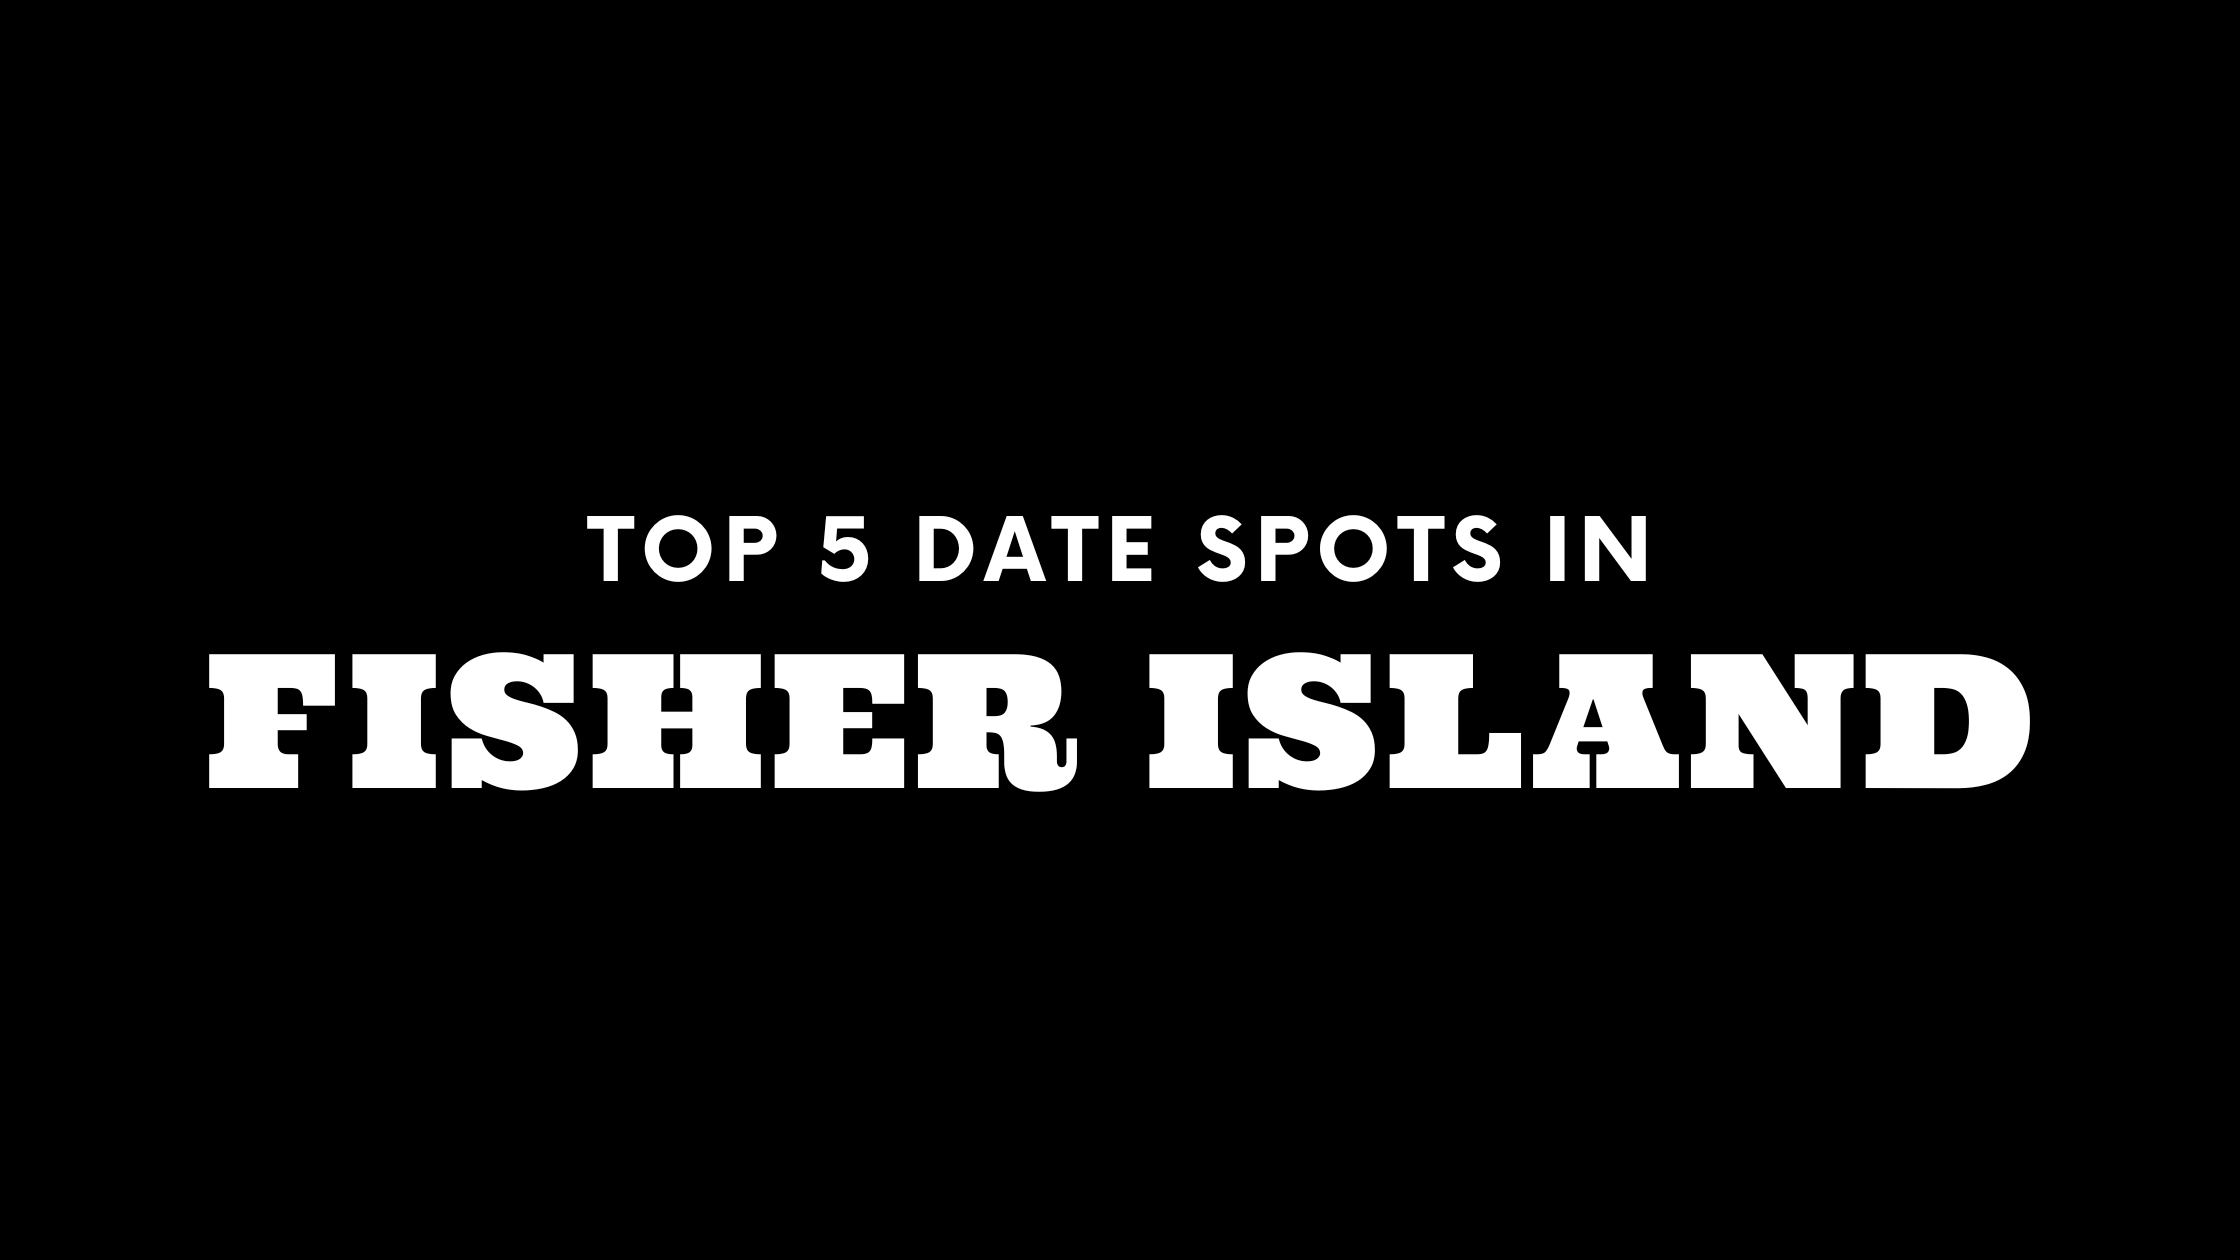 Top 5 Date Spots in Fisher Island